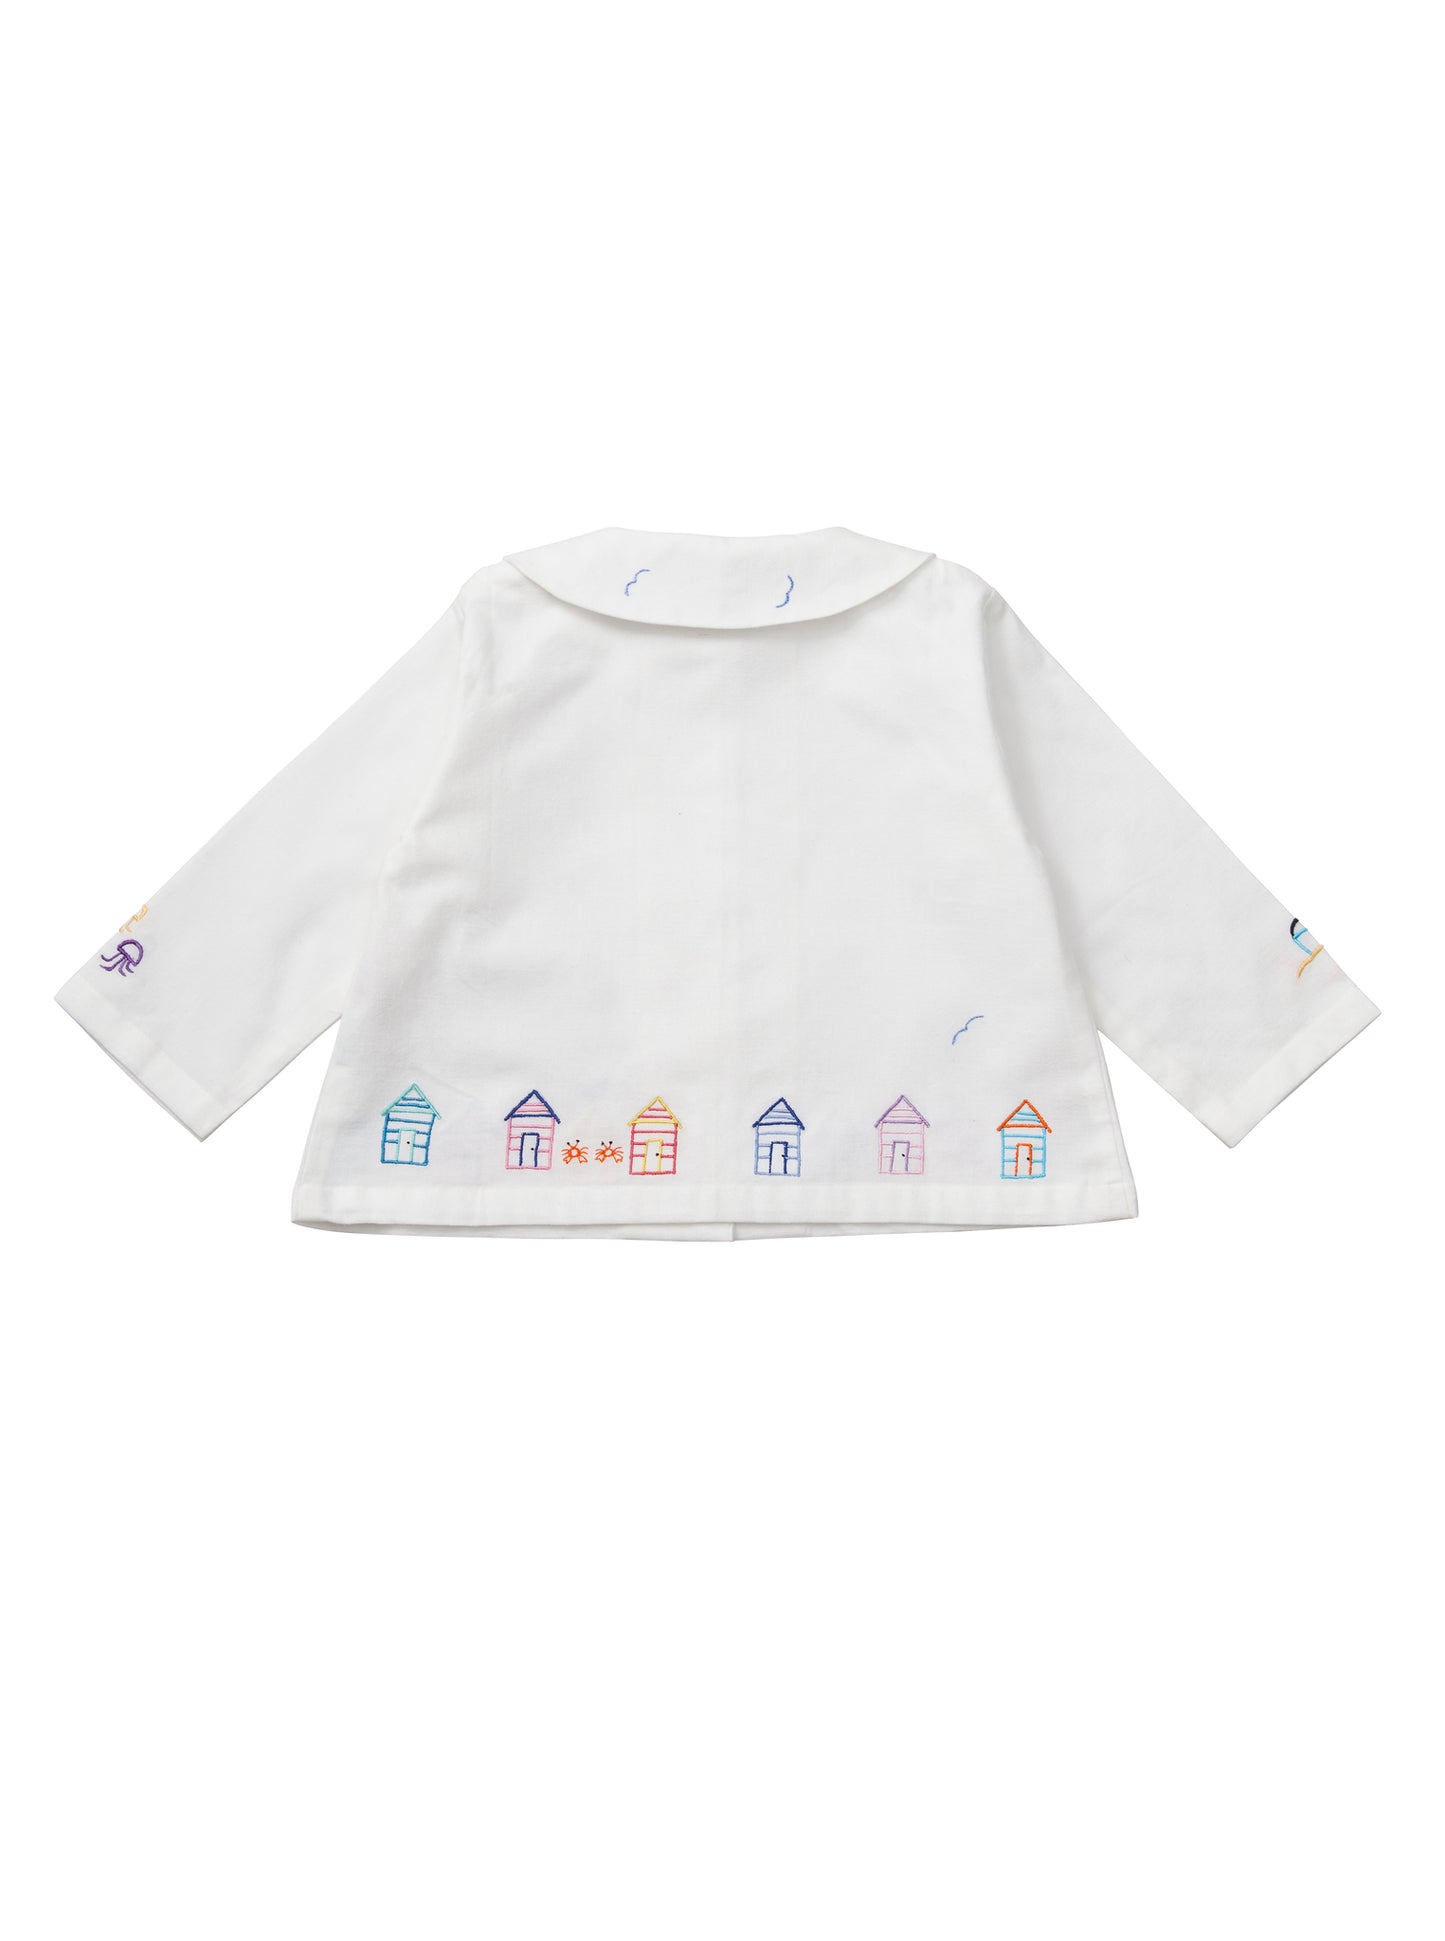 White cotton children's cropped pyjamas with a seaside theme.